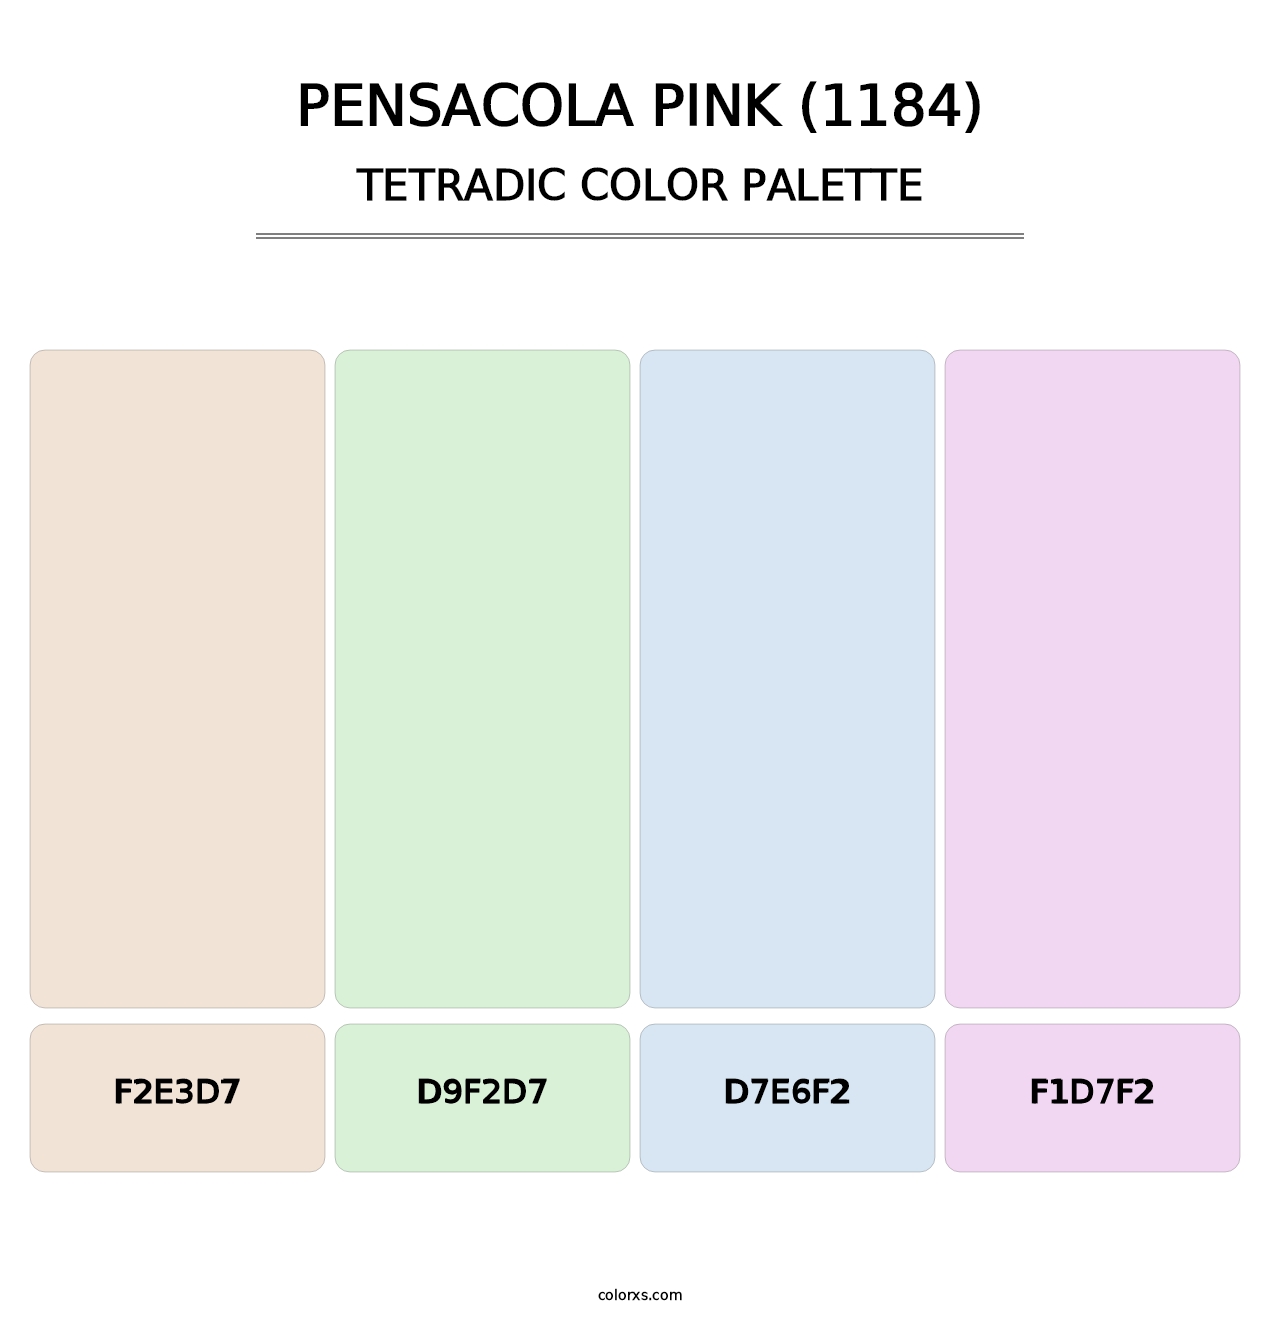 Pensacola Pink (1184) - Tetradic Color Palette